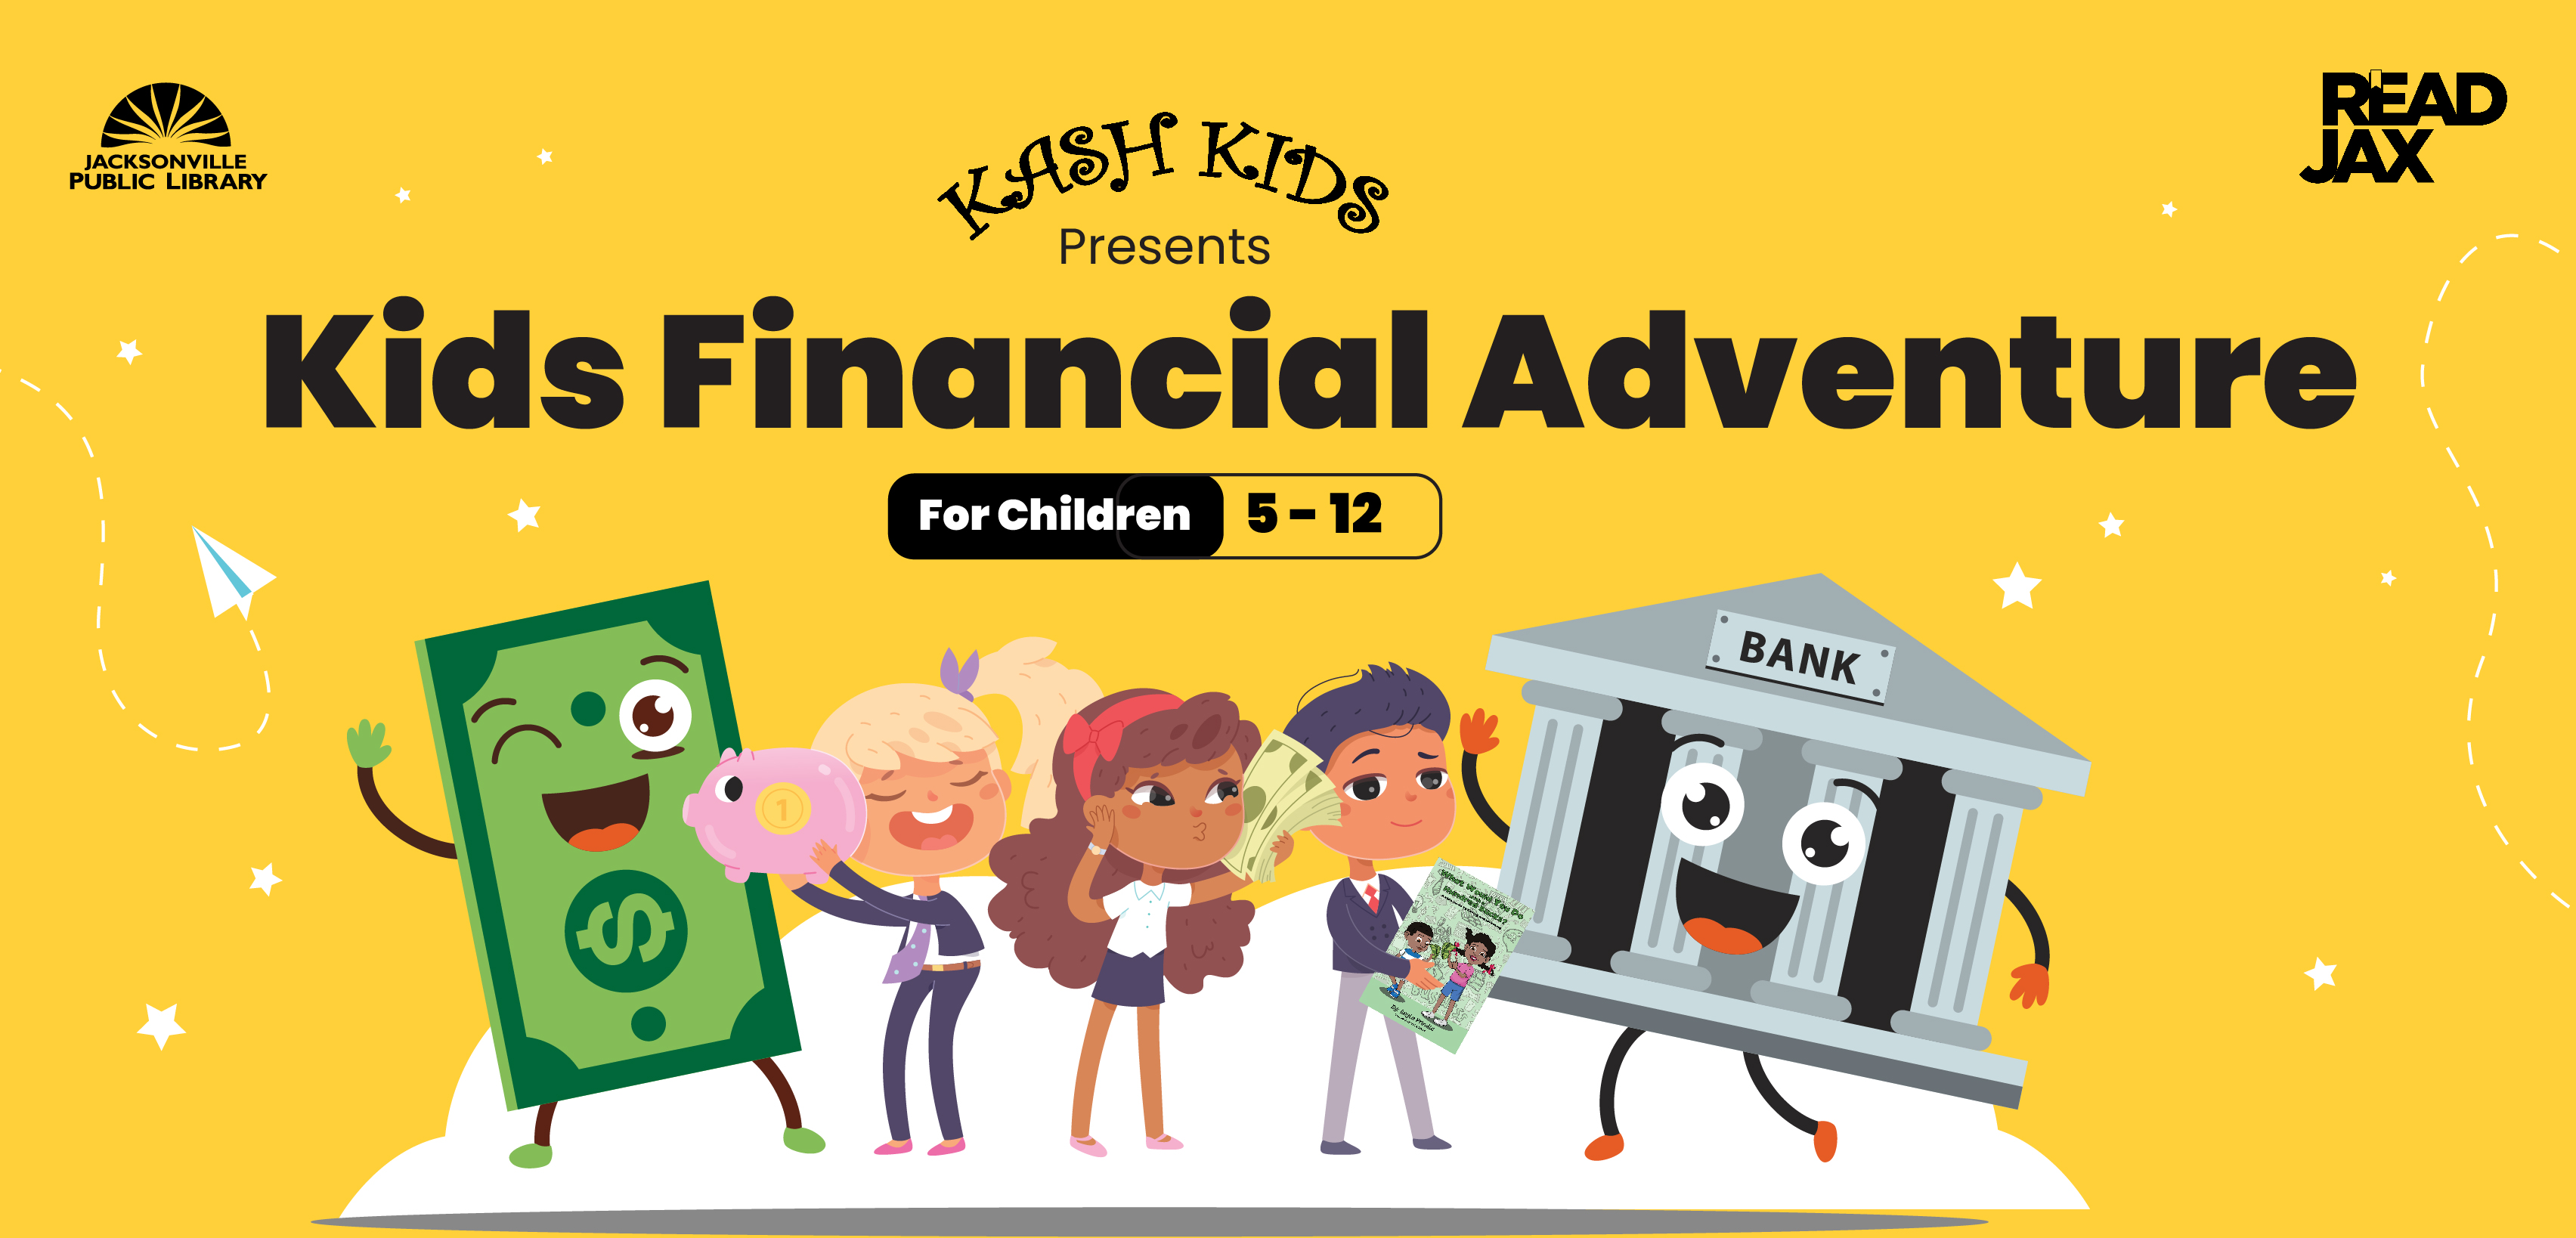 Kash Kids presents: Kids Financial Adventure for children 5-12